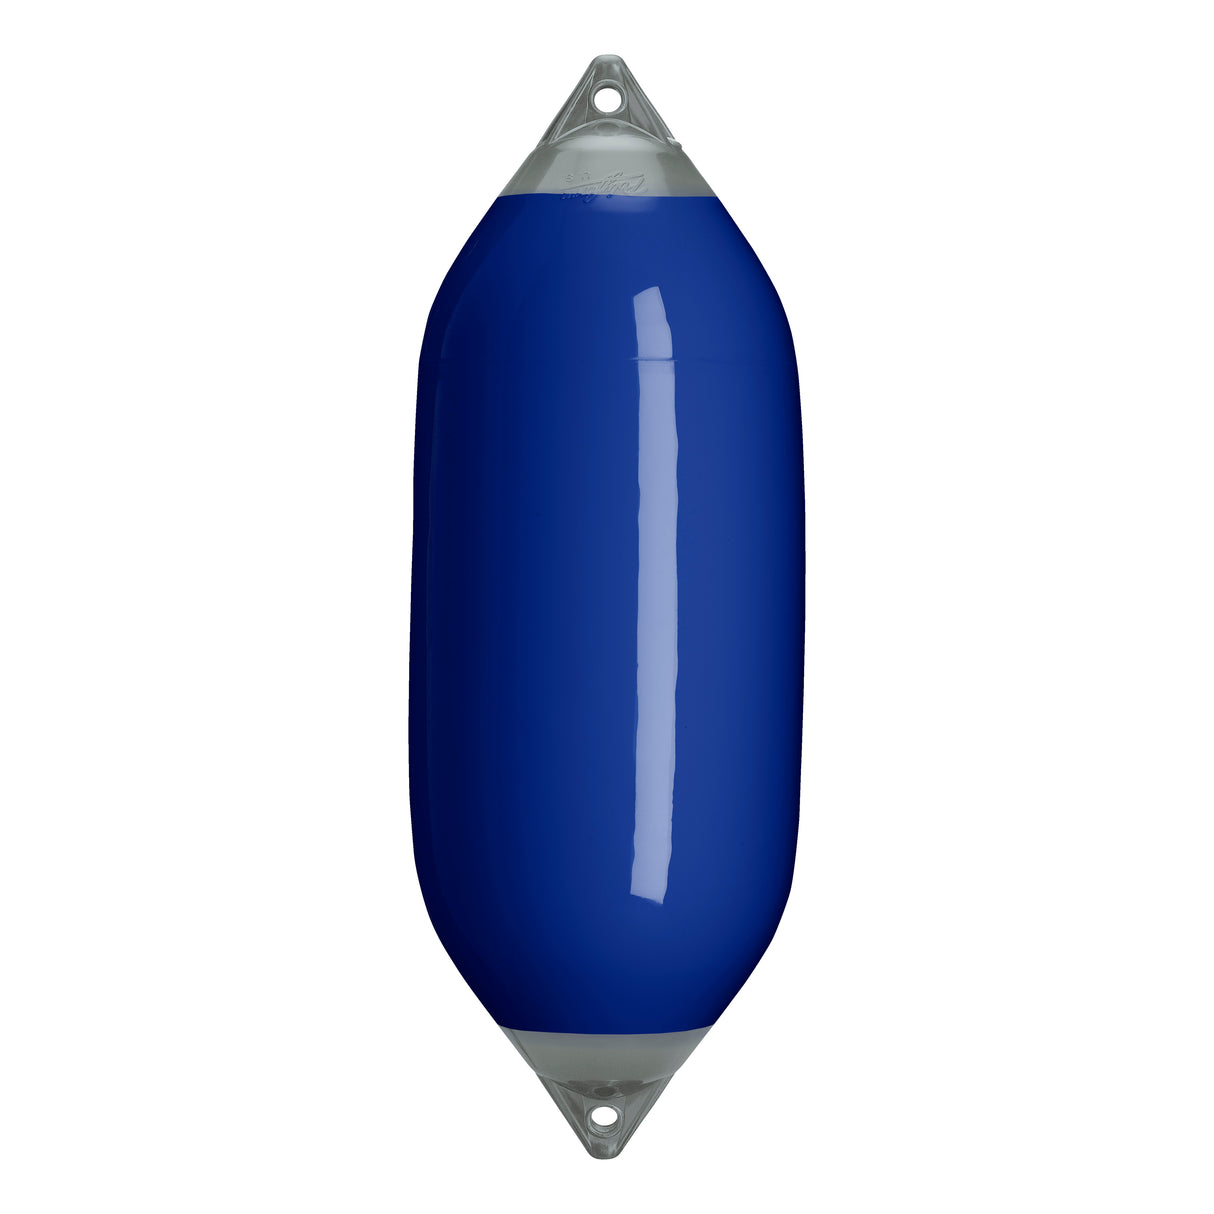 Cobalt Blue boat fender with Grey-Top, Polyform F-7